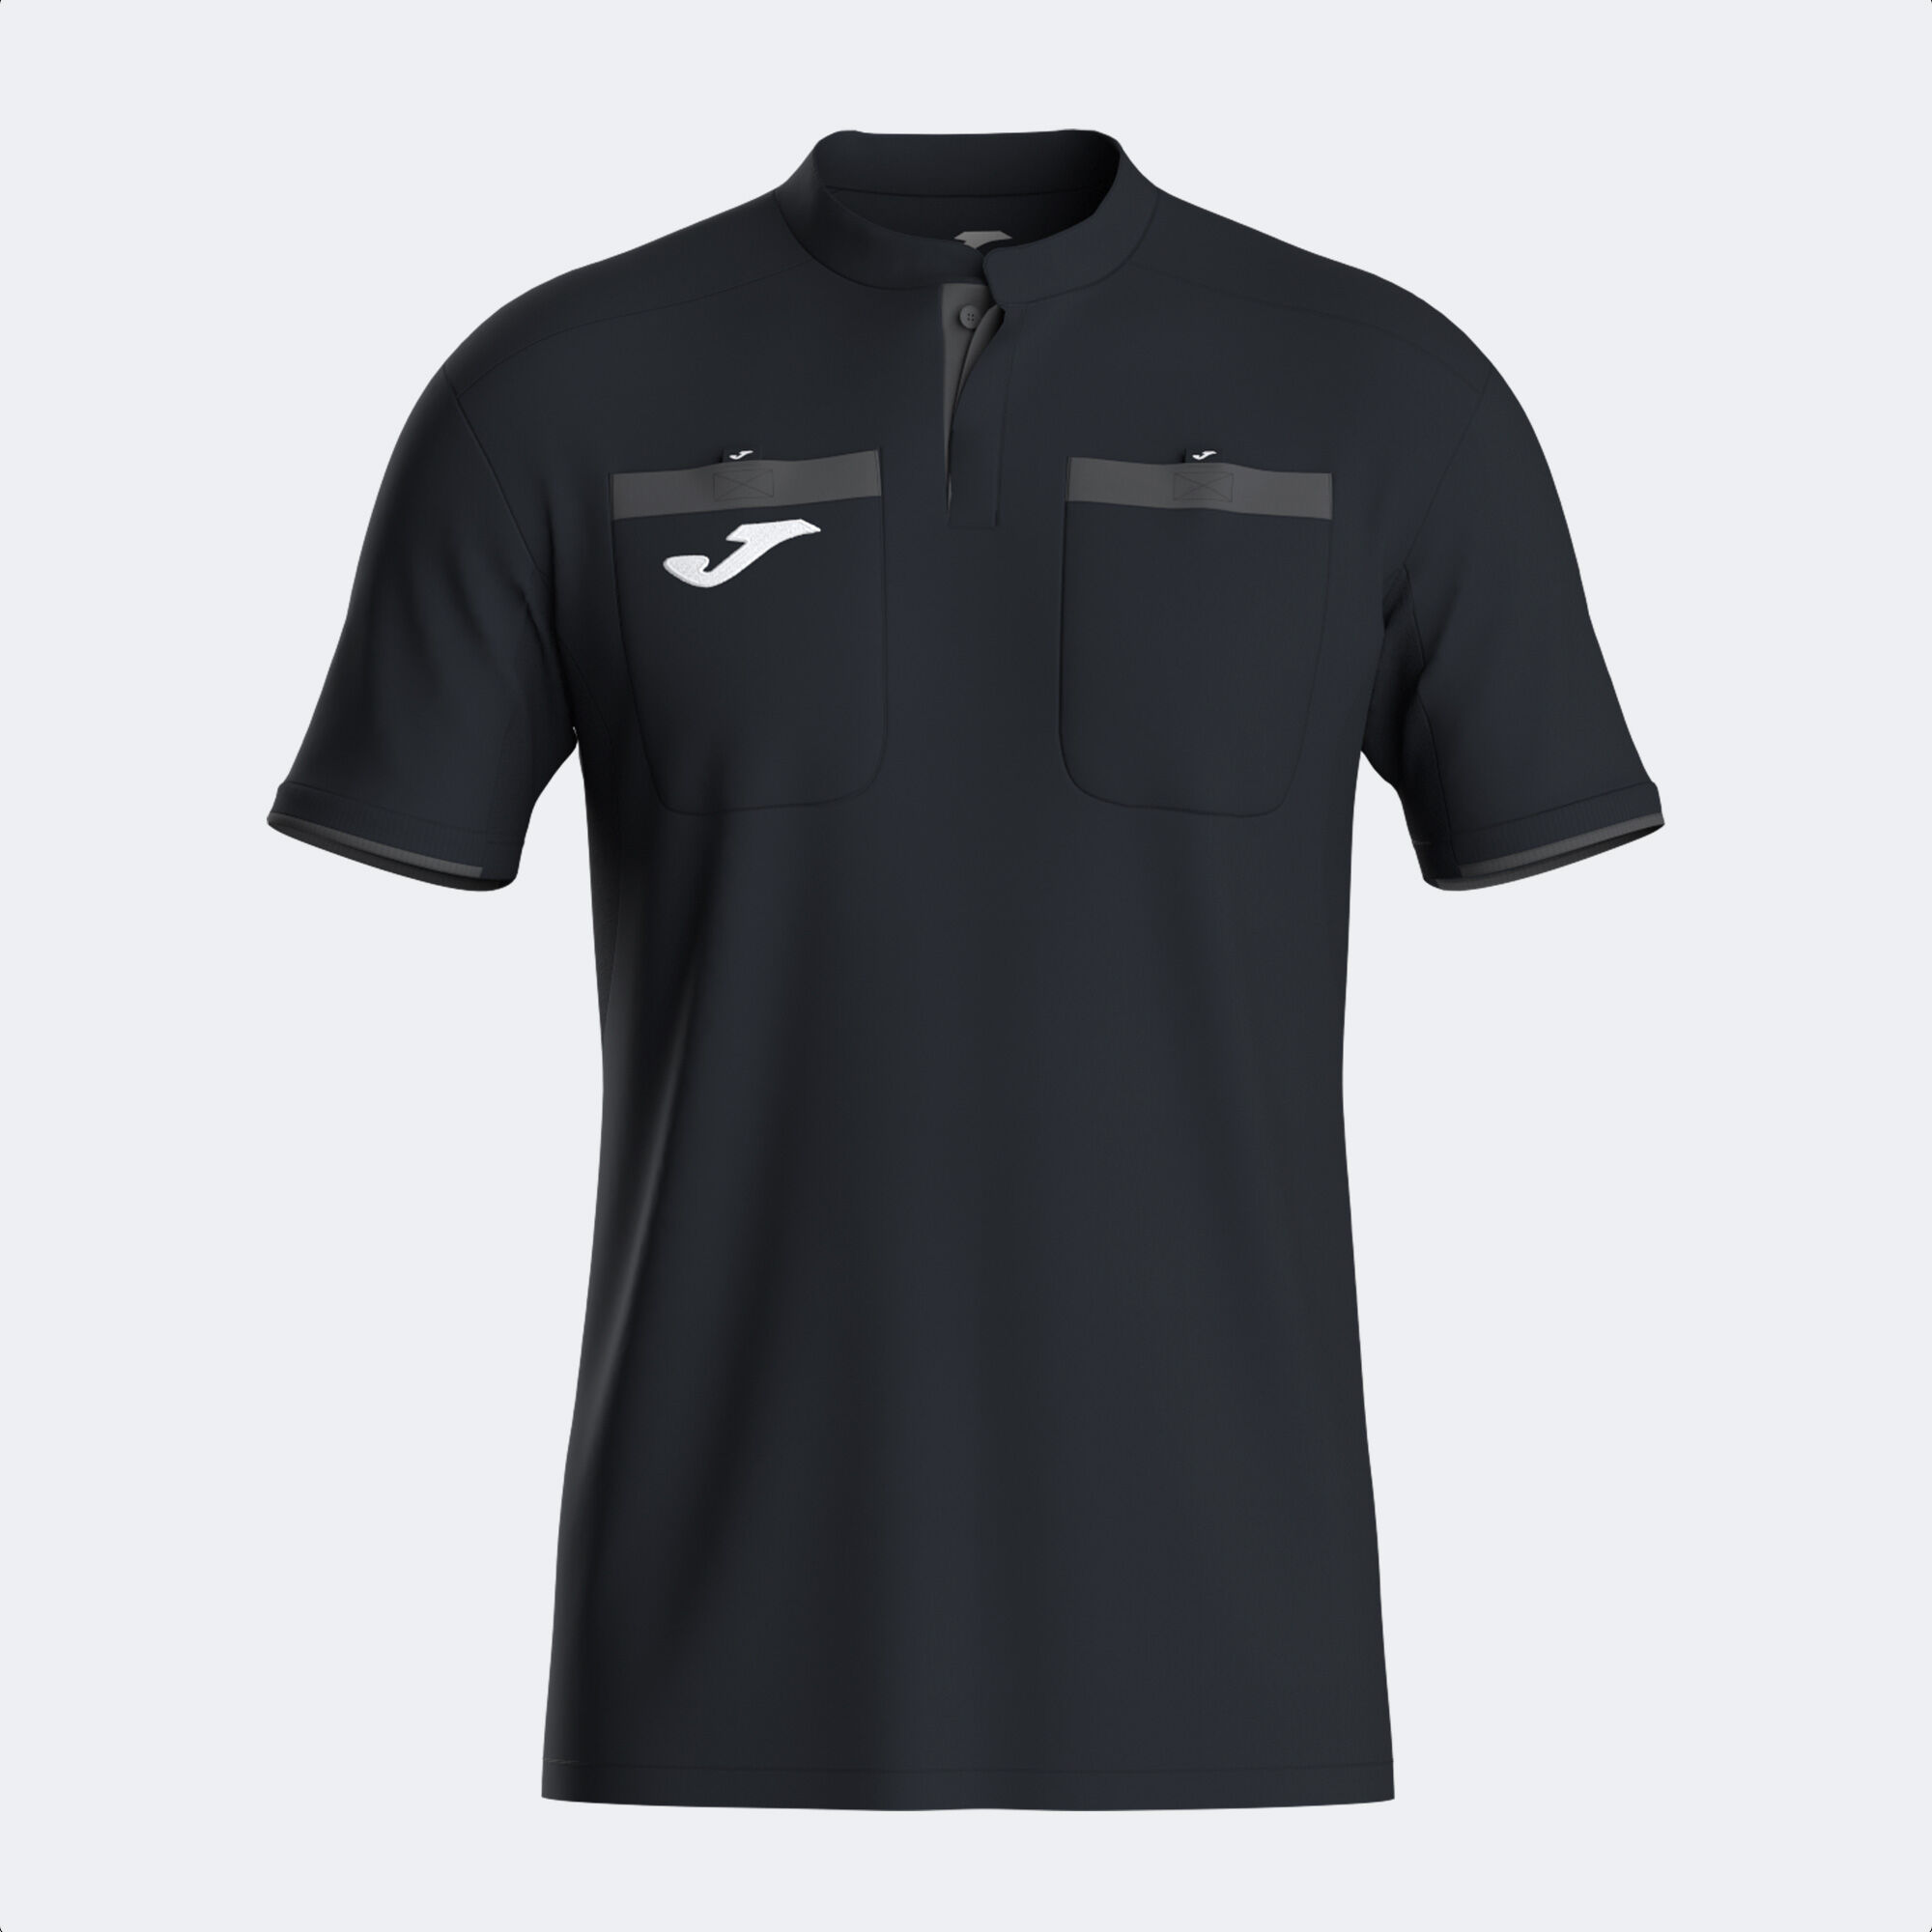 Camiseta manga corta hombre Referee negro antracita